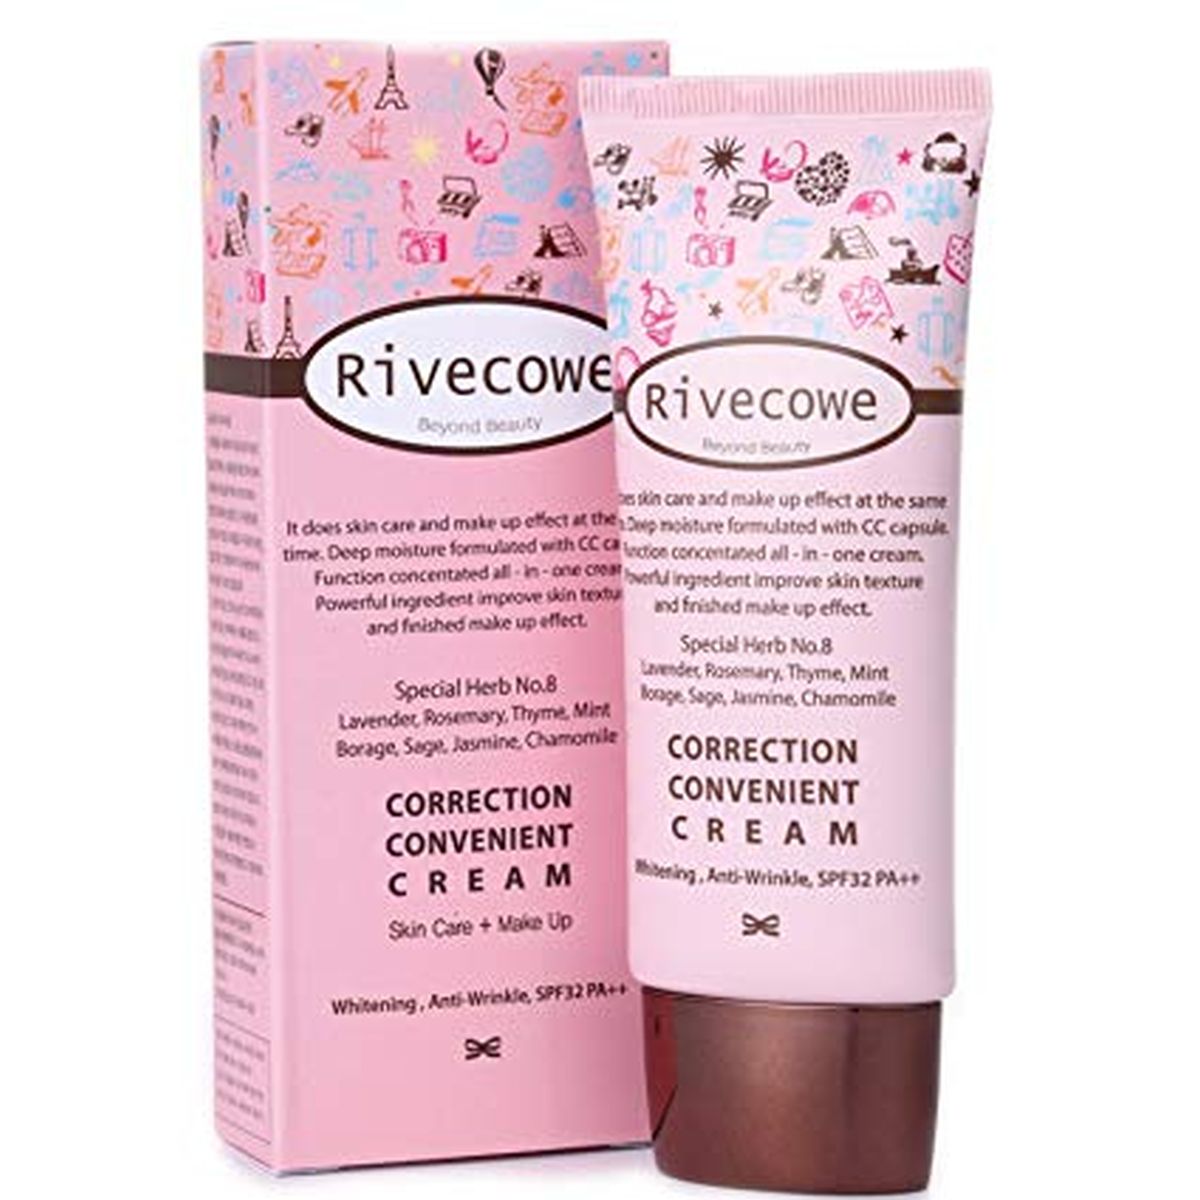 СС-крем для лица RIVECOWE Beyond Beauty Correction Convenient Cream - 40 мл